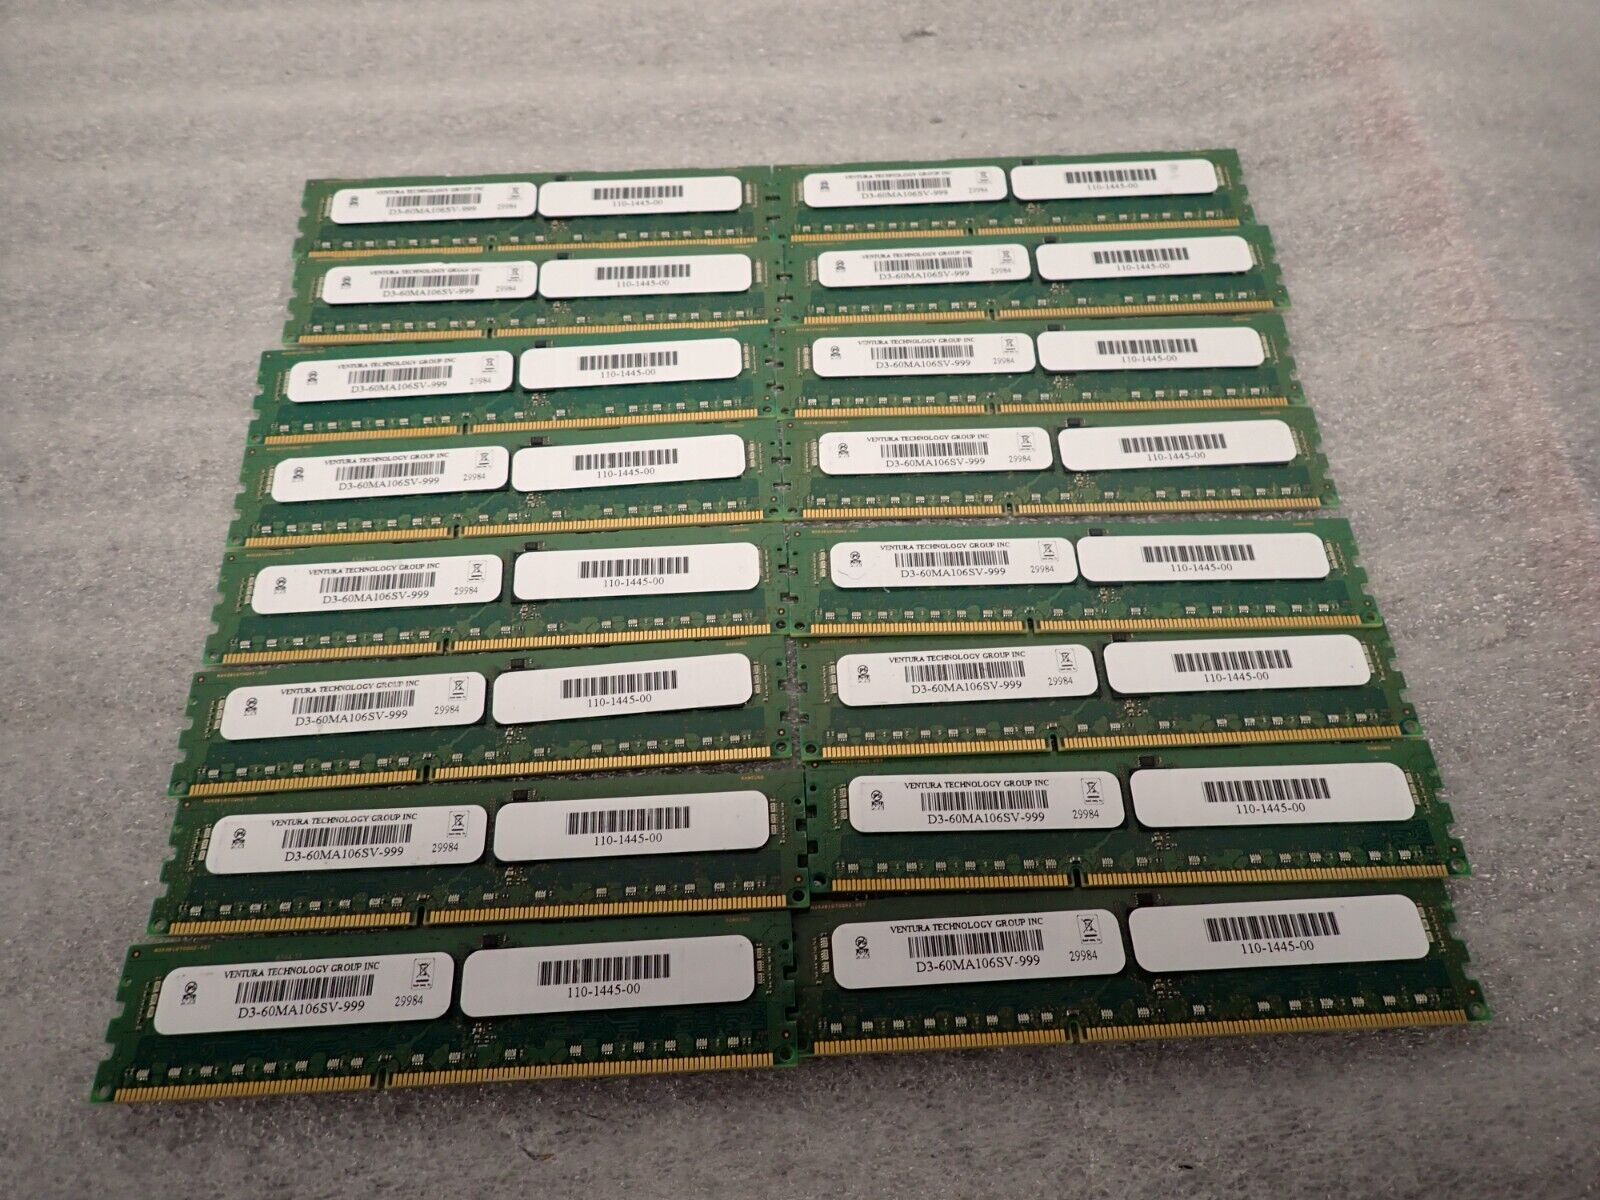 Lot of (16)8GB Ventura Technology Group D3-60MA106SV-999 PC3-10600 Server Memory